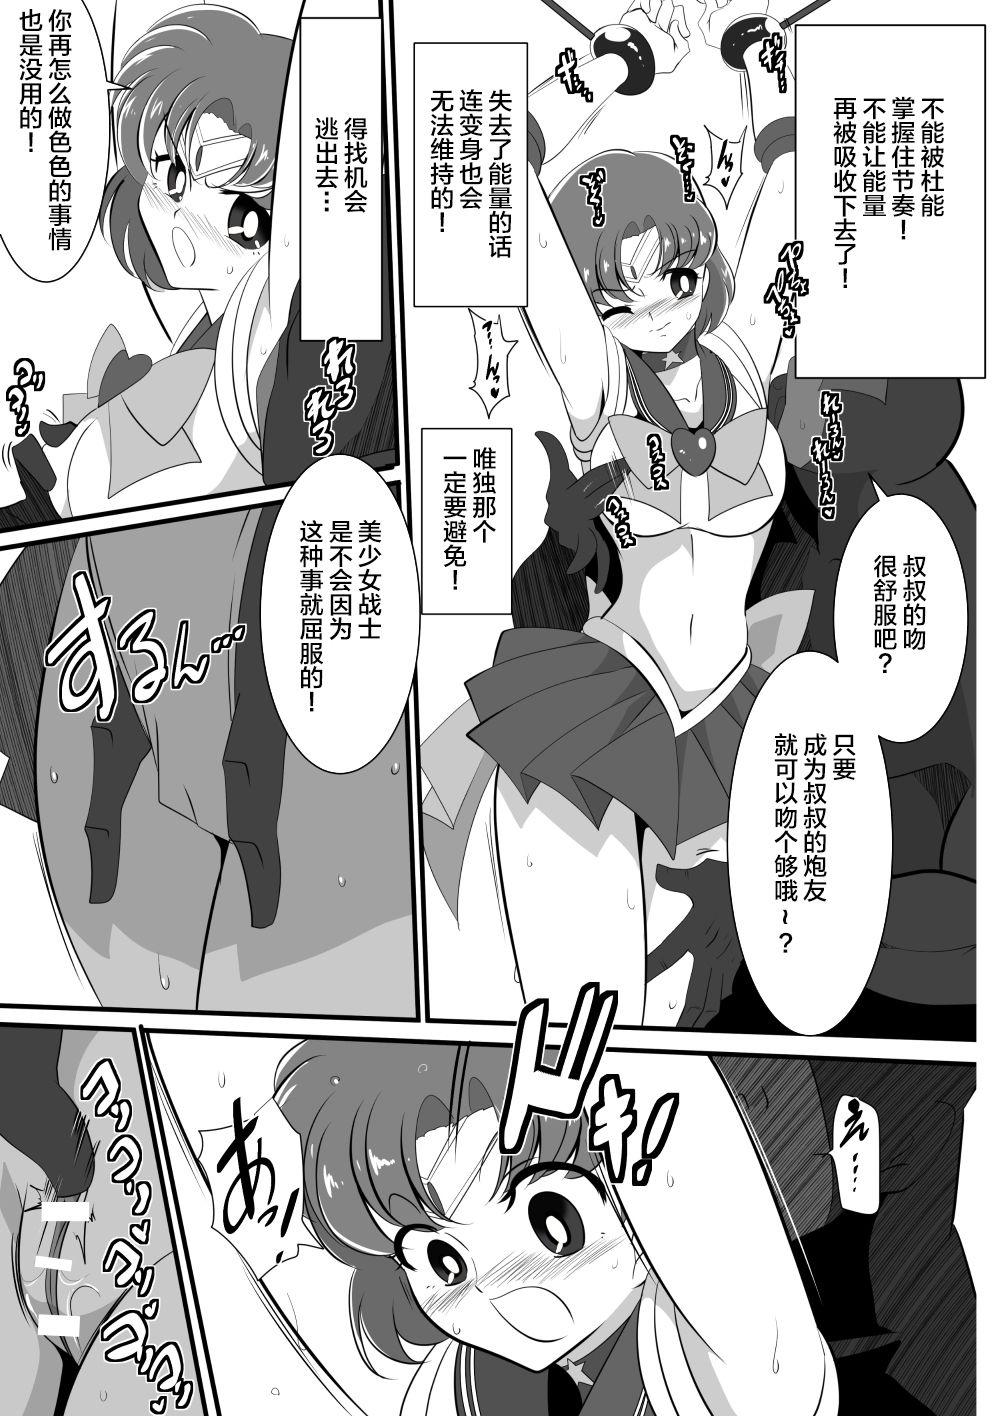 Stepsis Suisei no Haiboku - Sailor moon De Quatro - Page 11